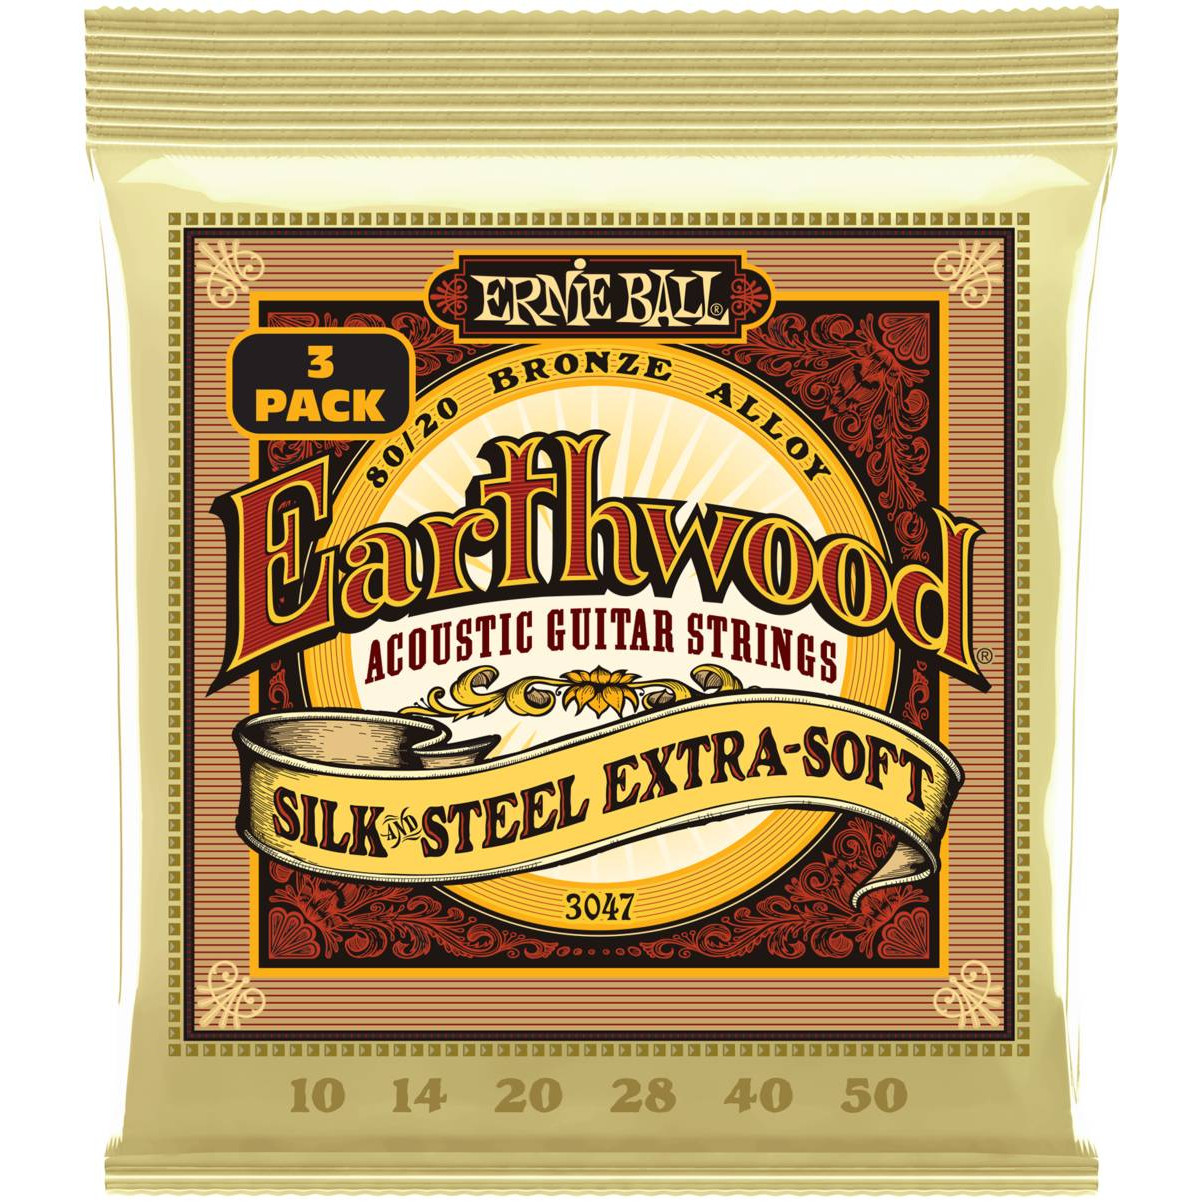 Струны ERNIE BALL 3047 Earthwood 80/20 Silk and Steel Extra Soft 3 Pack 10-50 для акустической гитары